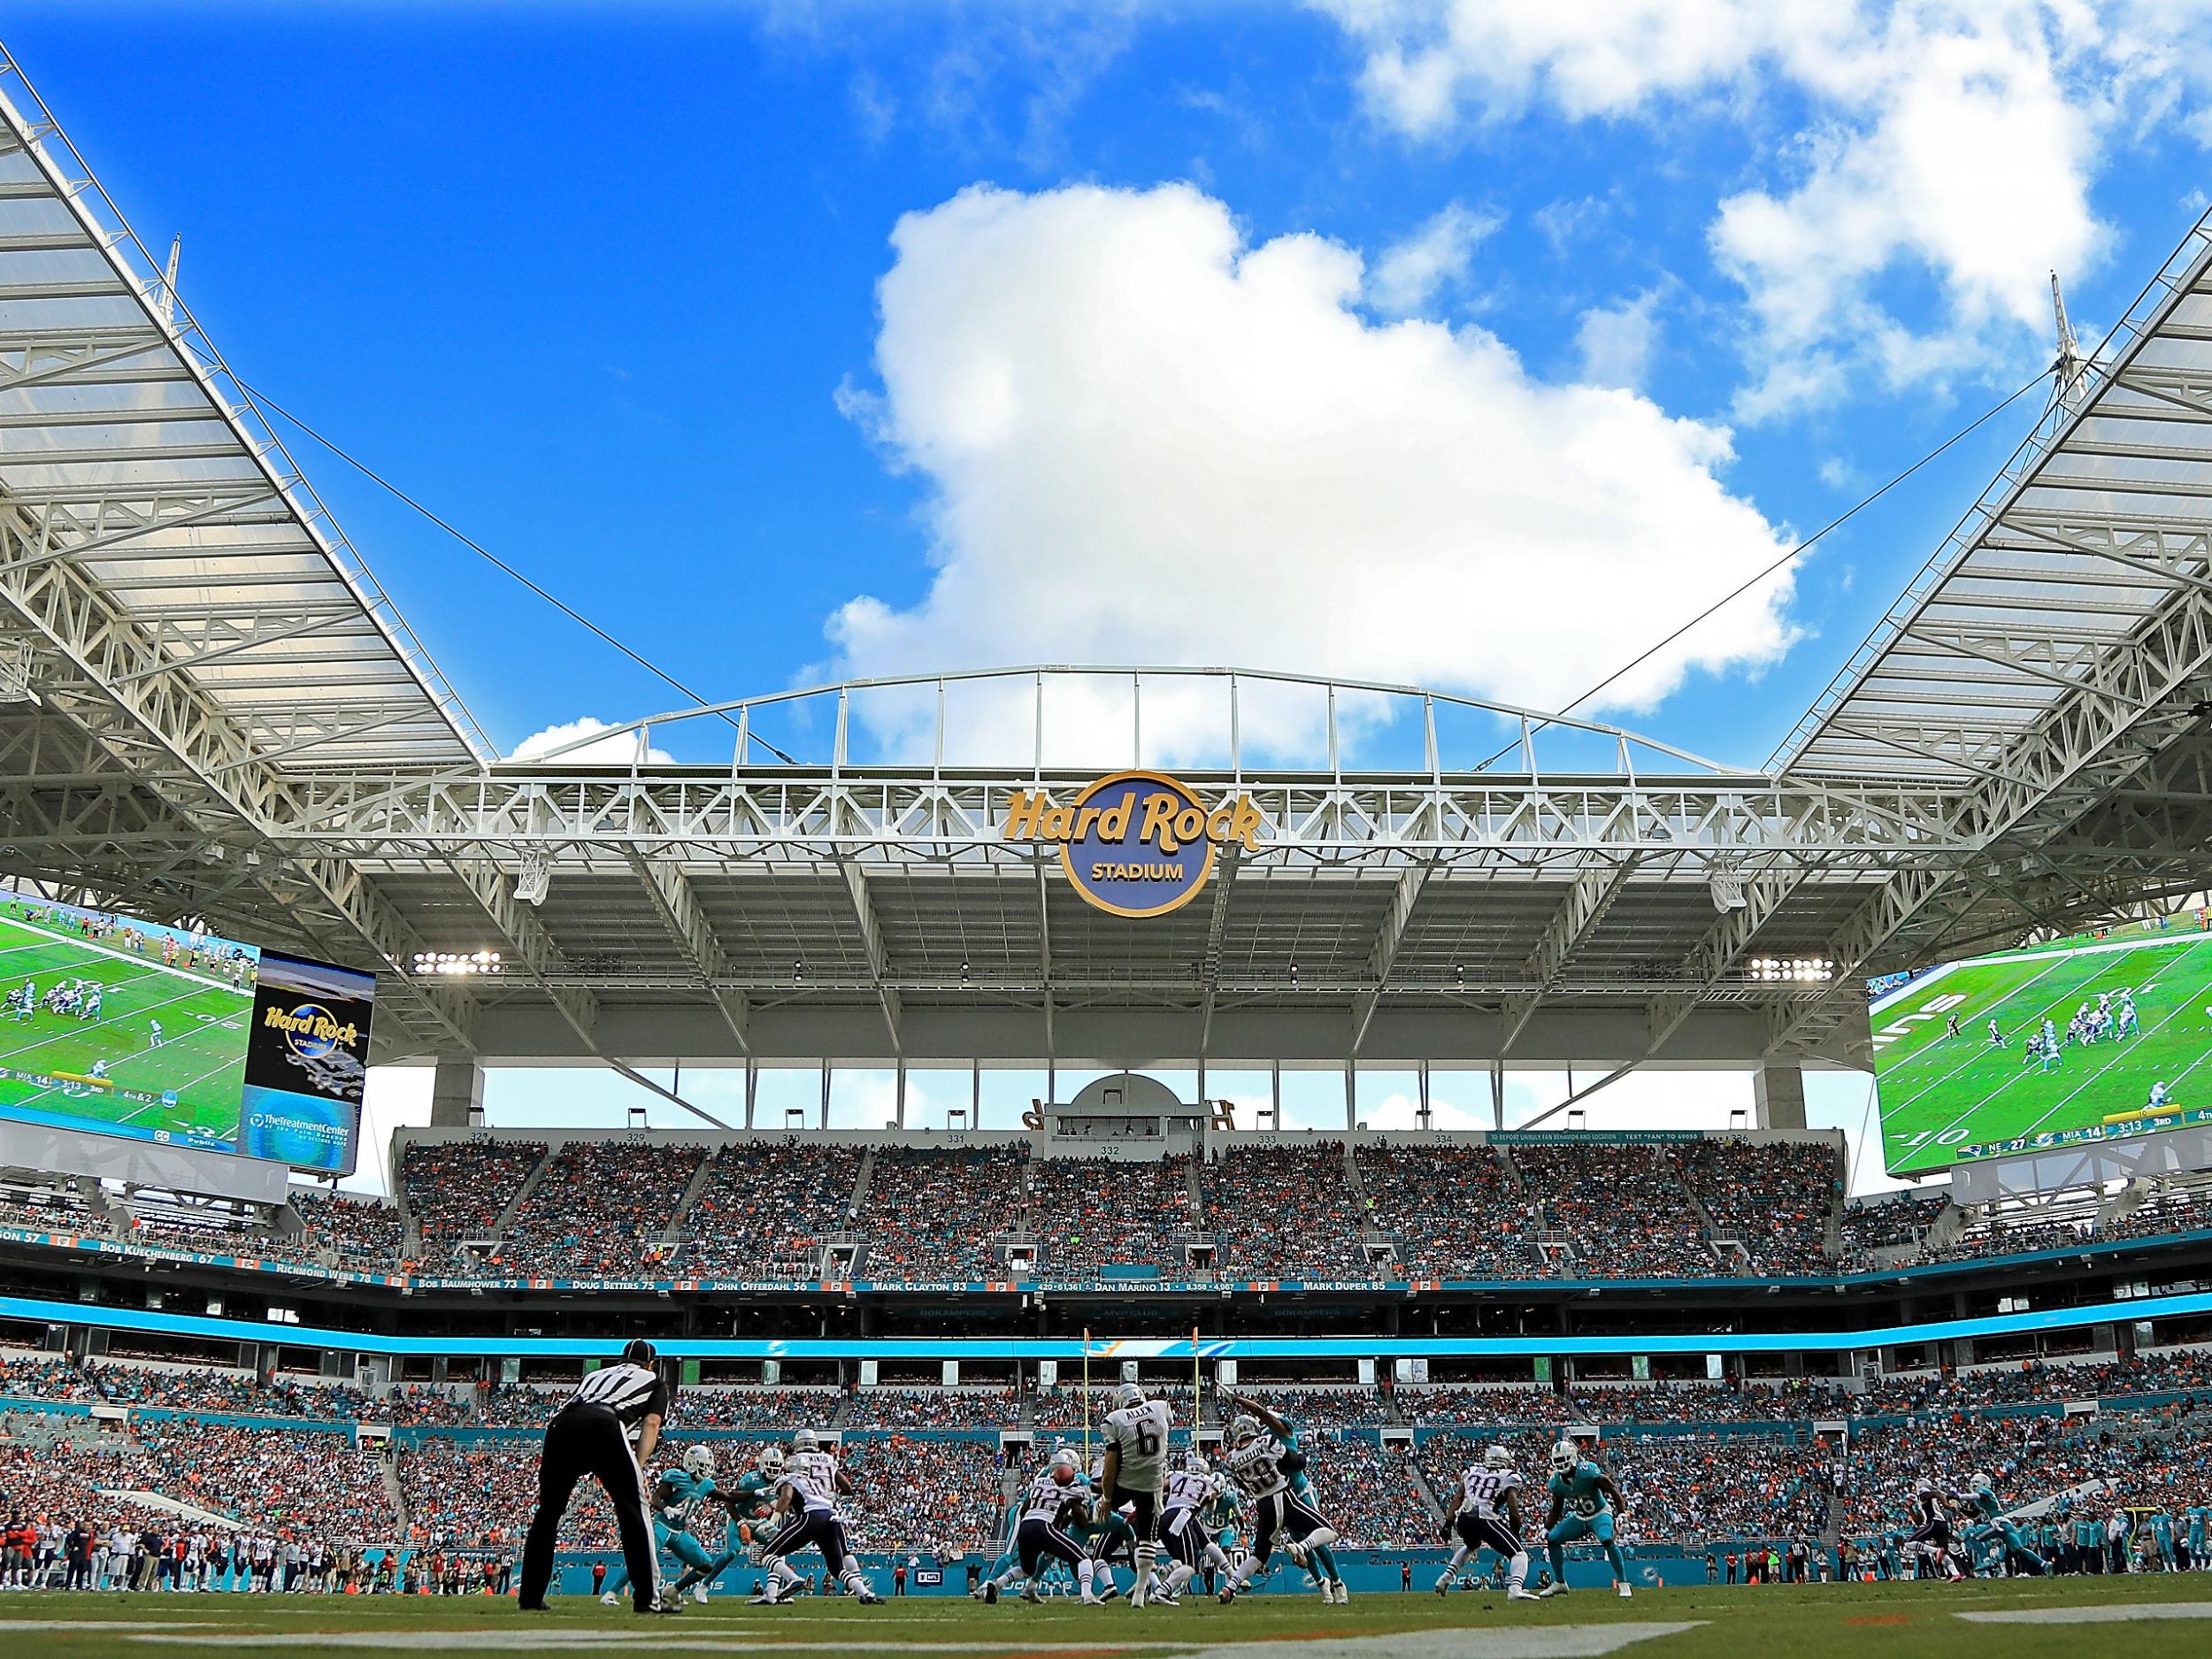 Miami's Hard Rock stadium hosted el clásico last summer and could now host La Liga games